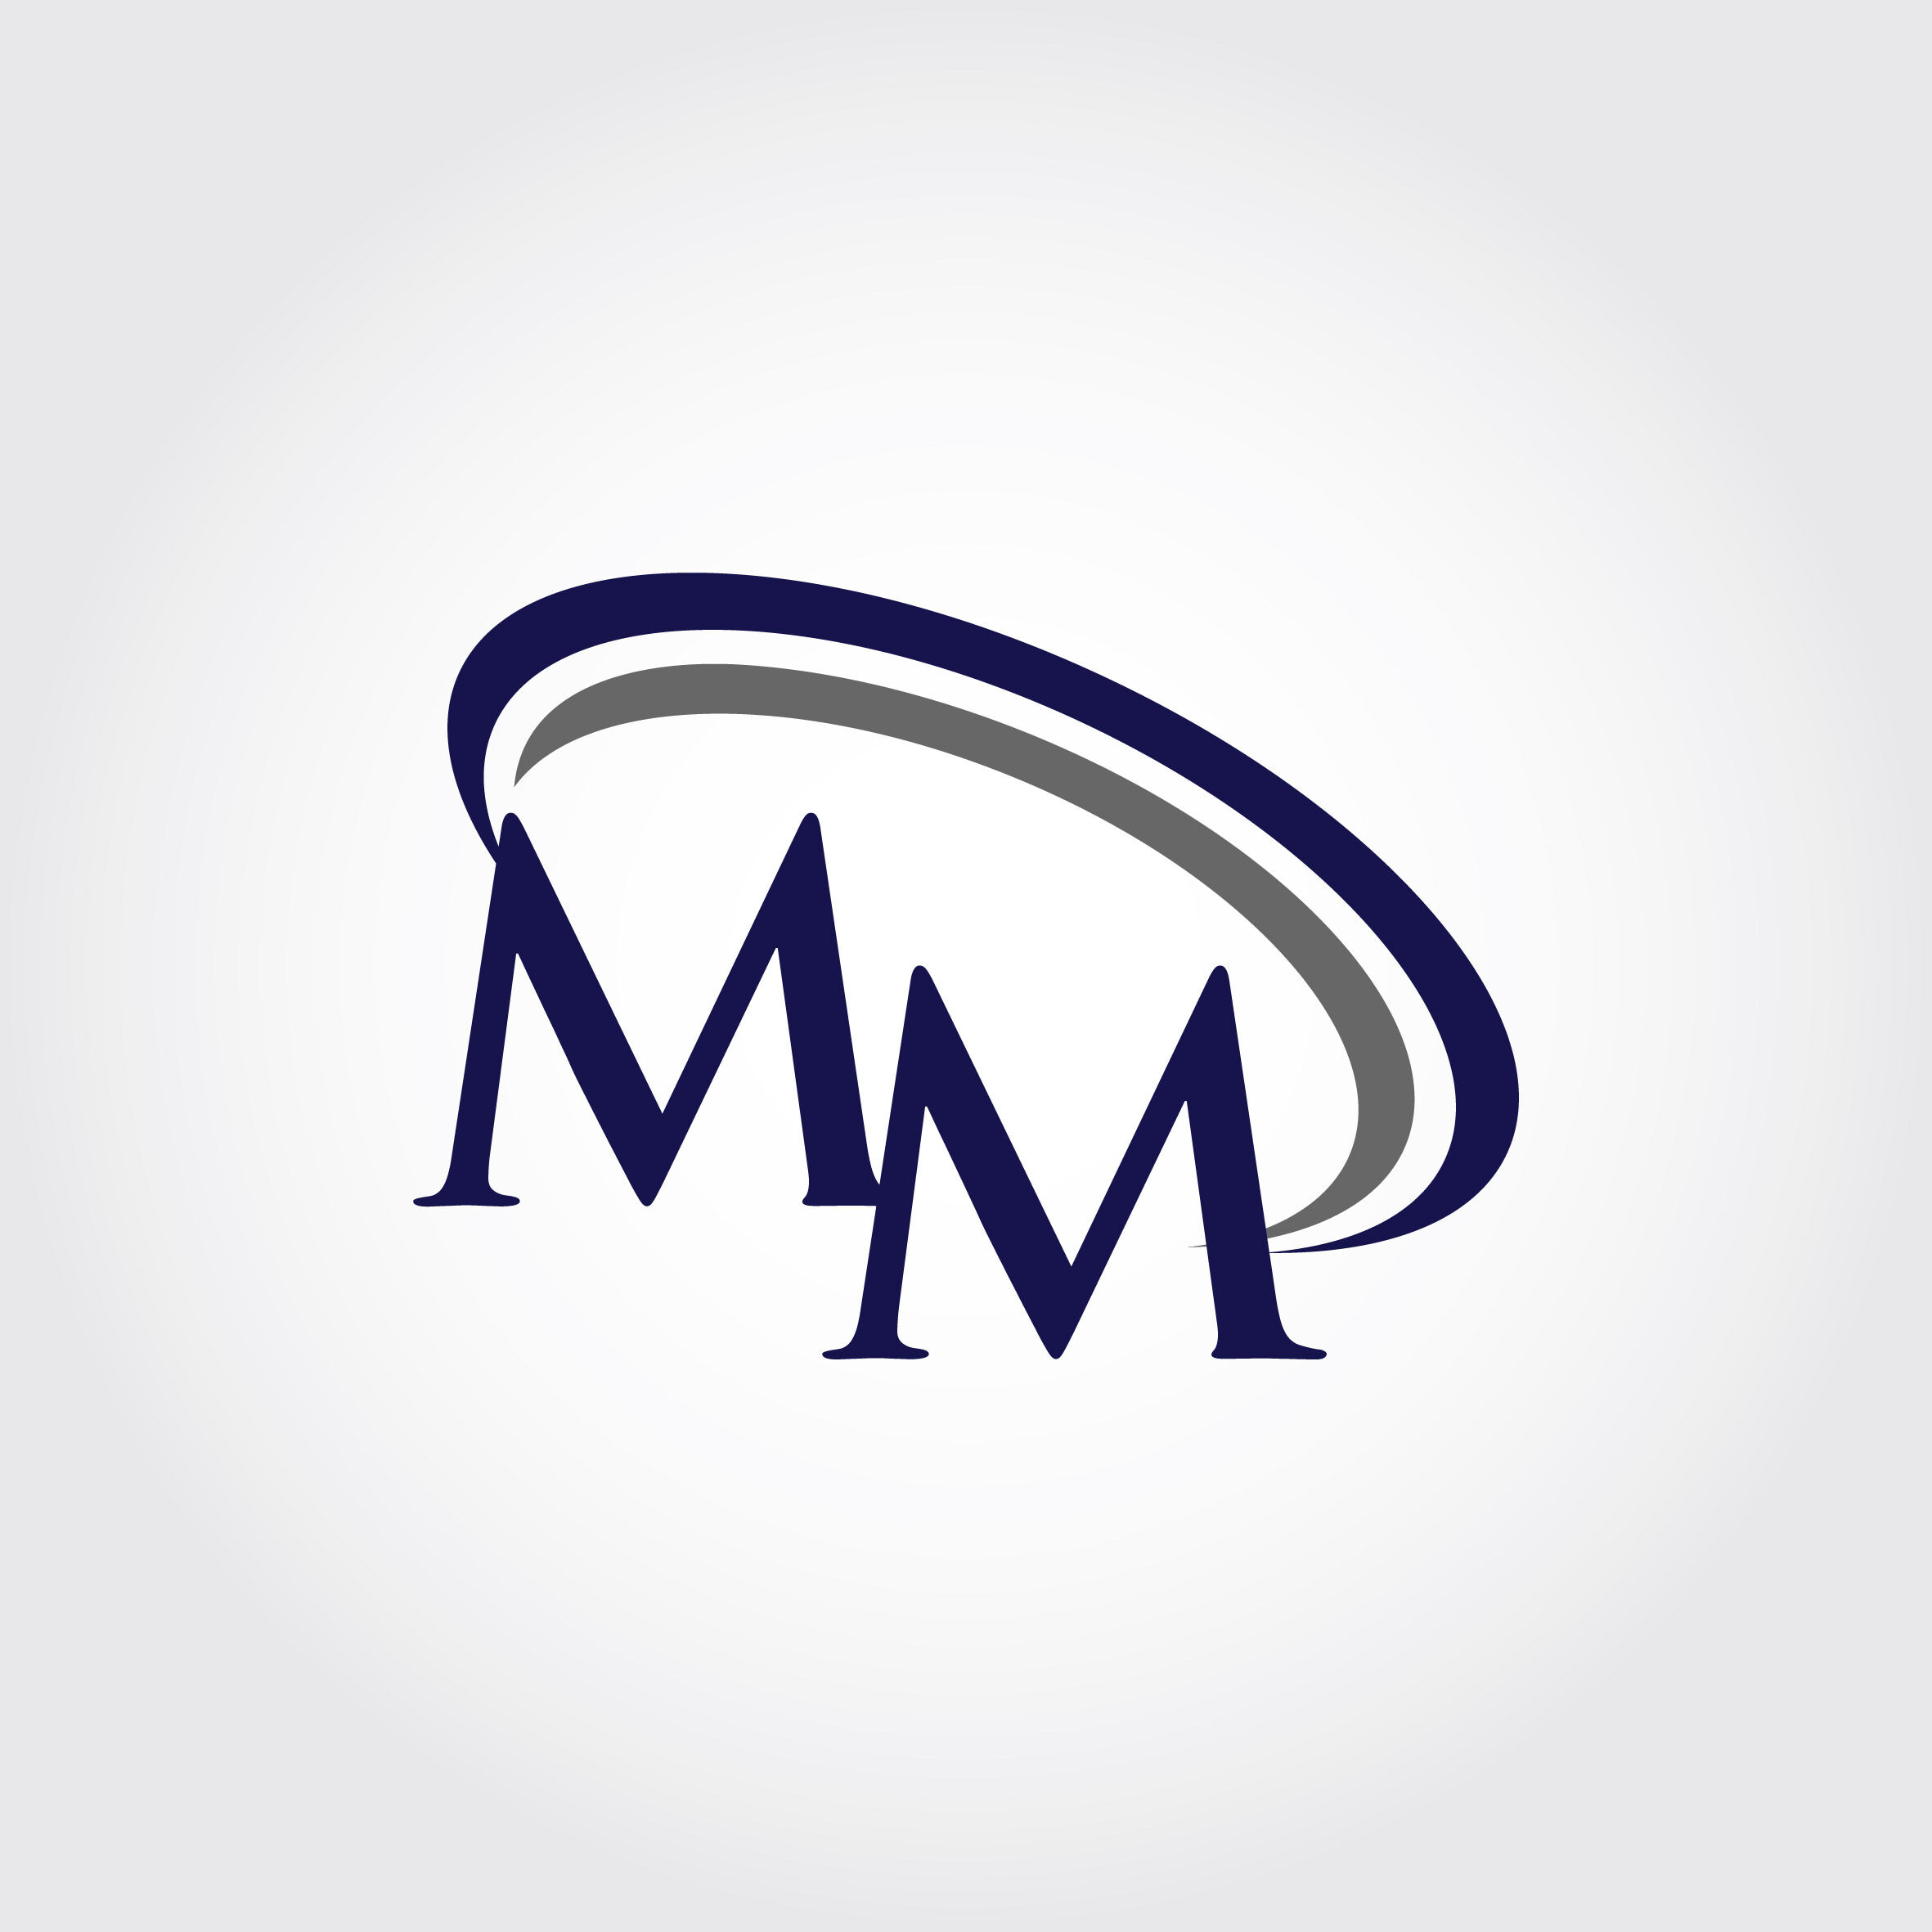 Mm Logo - Free Vectors & PSDs to Download